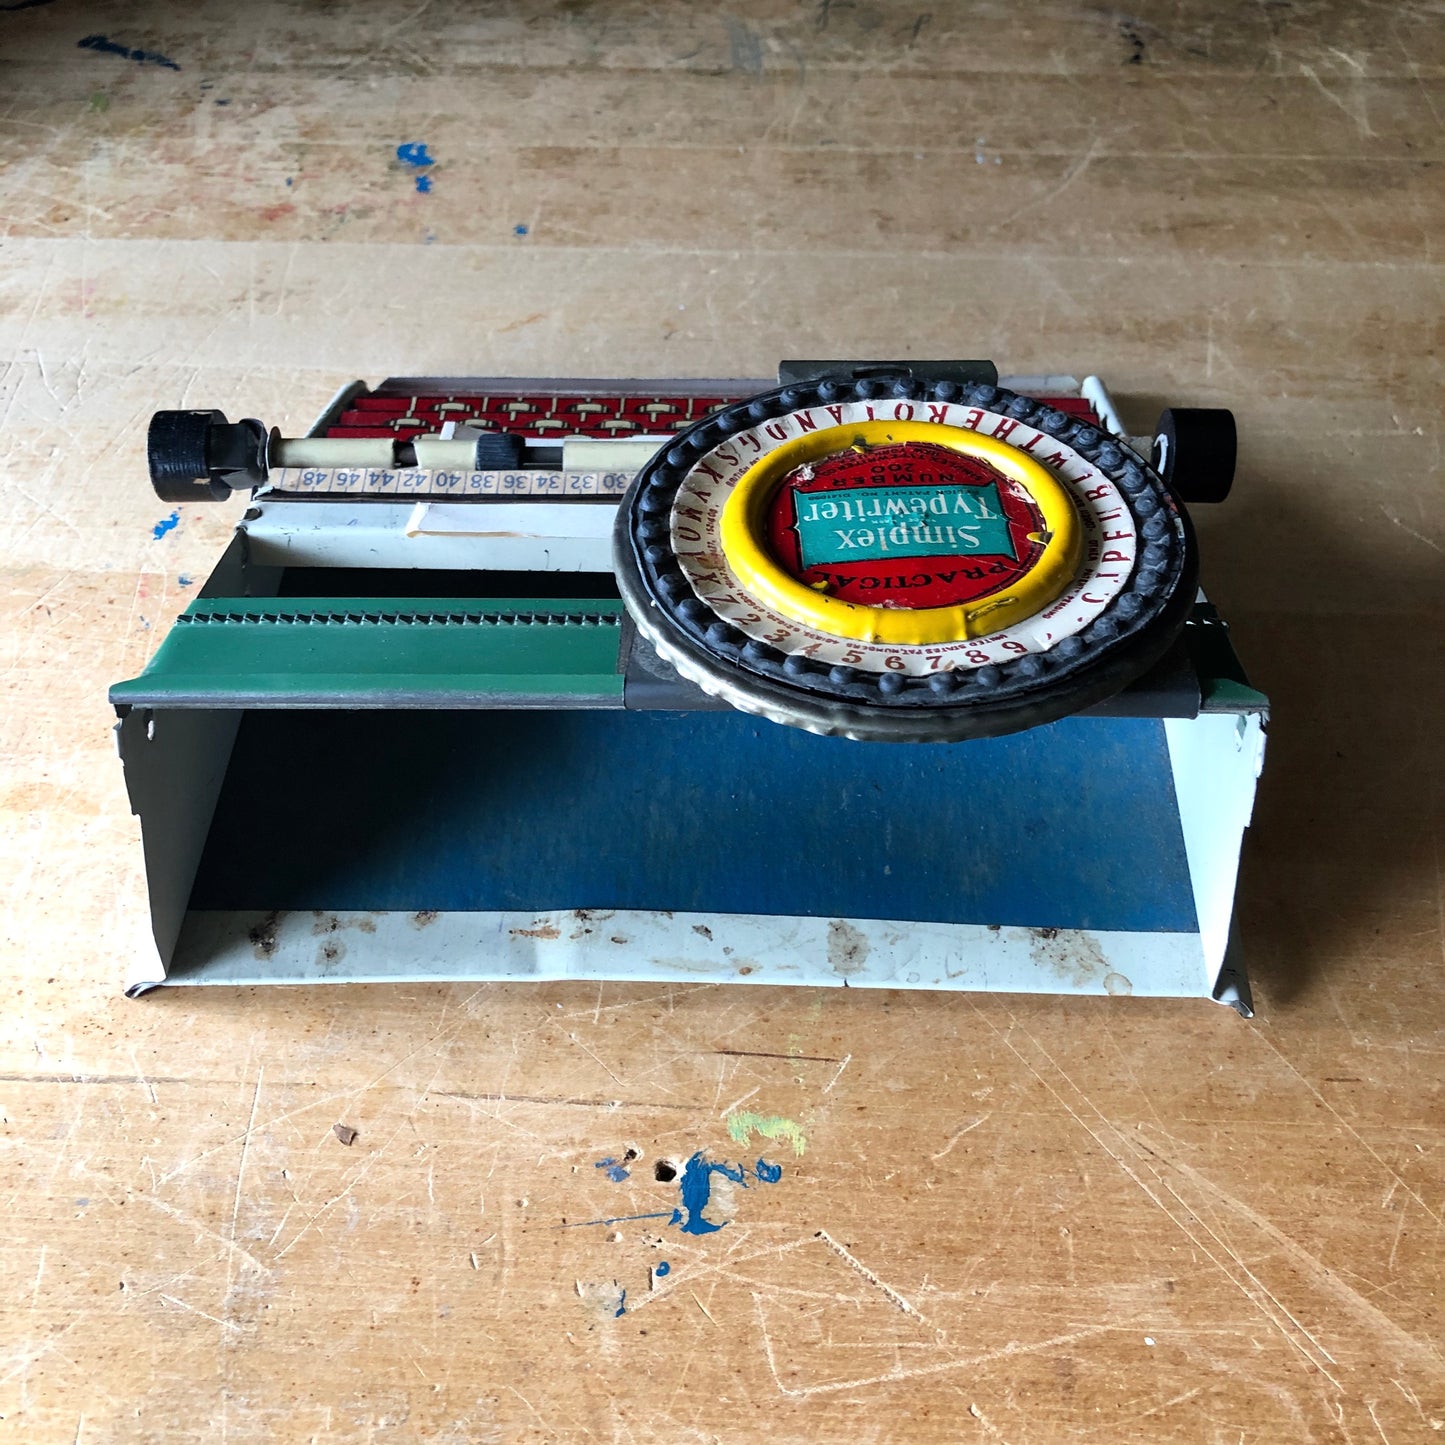 Simplex Toy Litho Tin Typewriter (c.1930s)